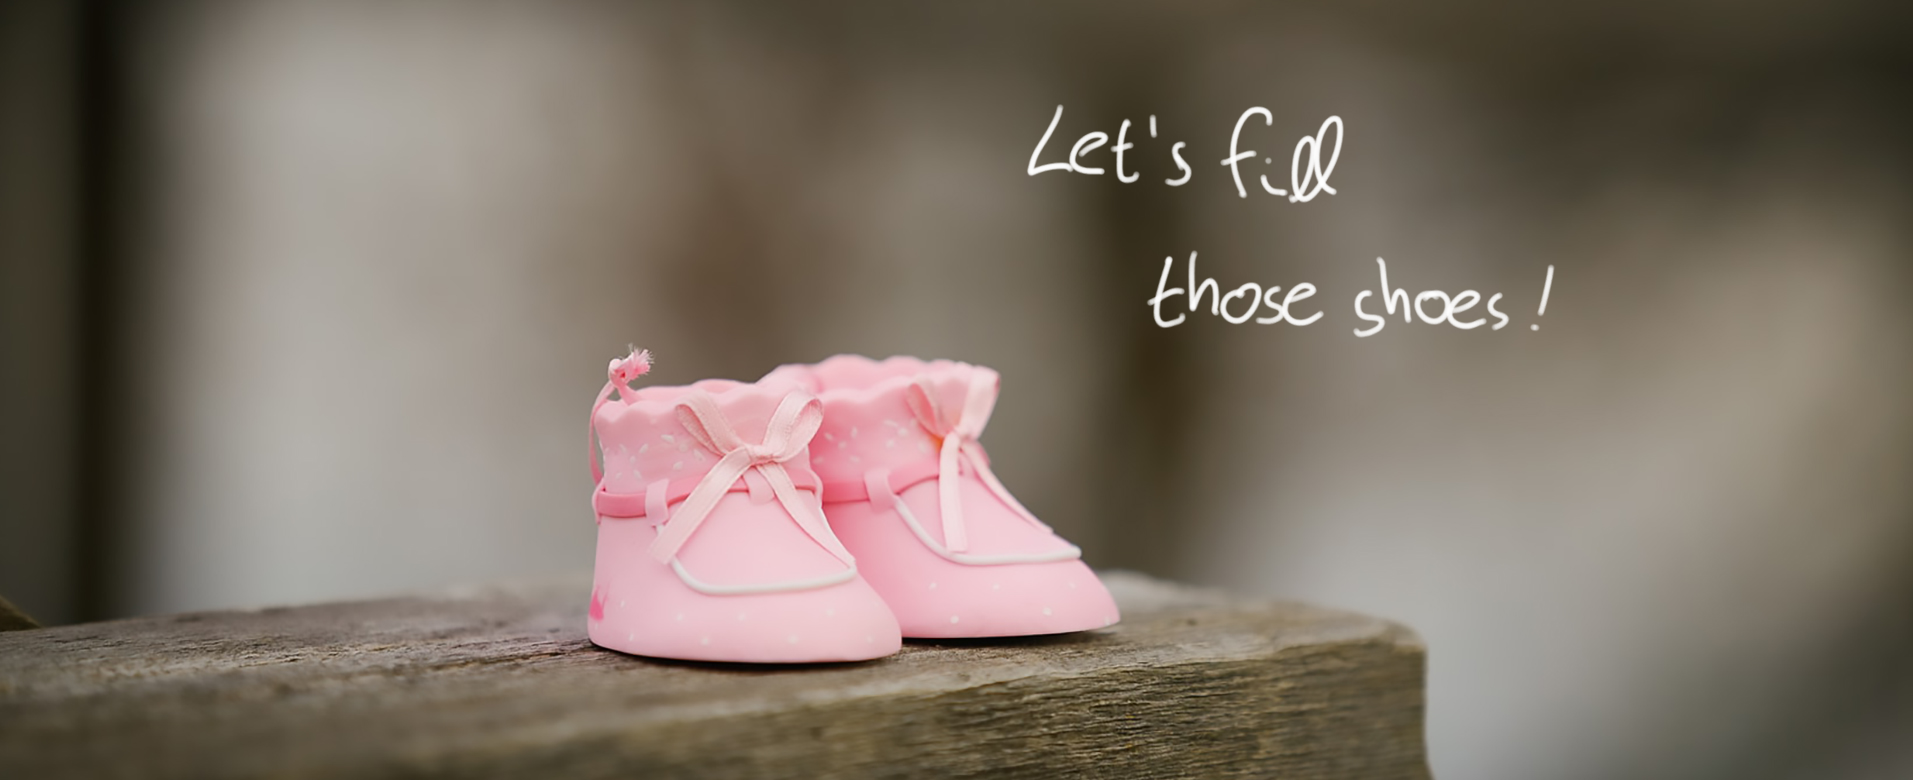 pink infant shoes gonimon fertility